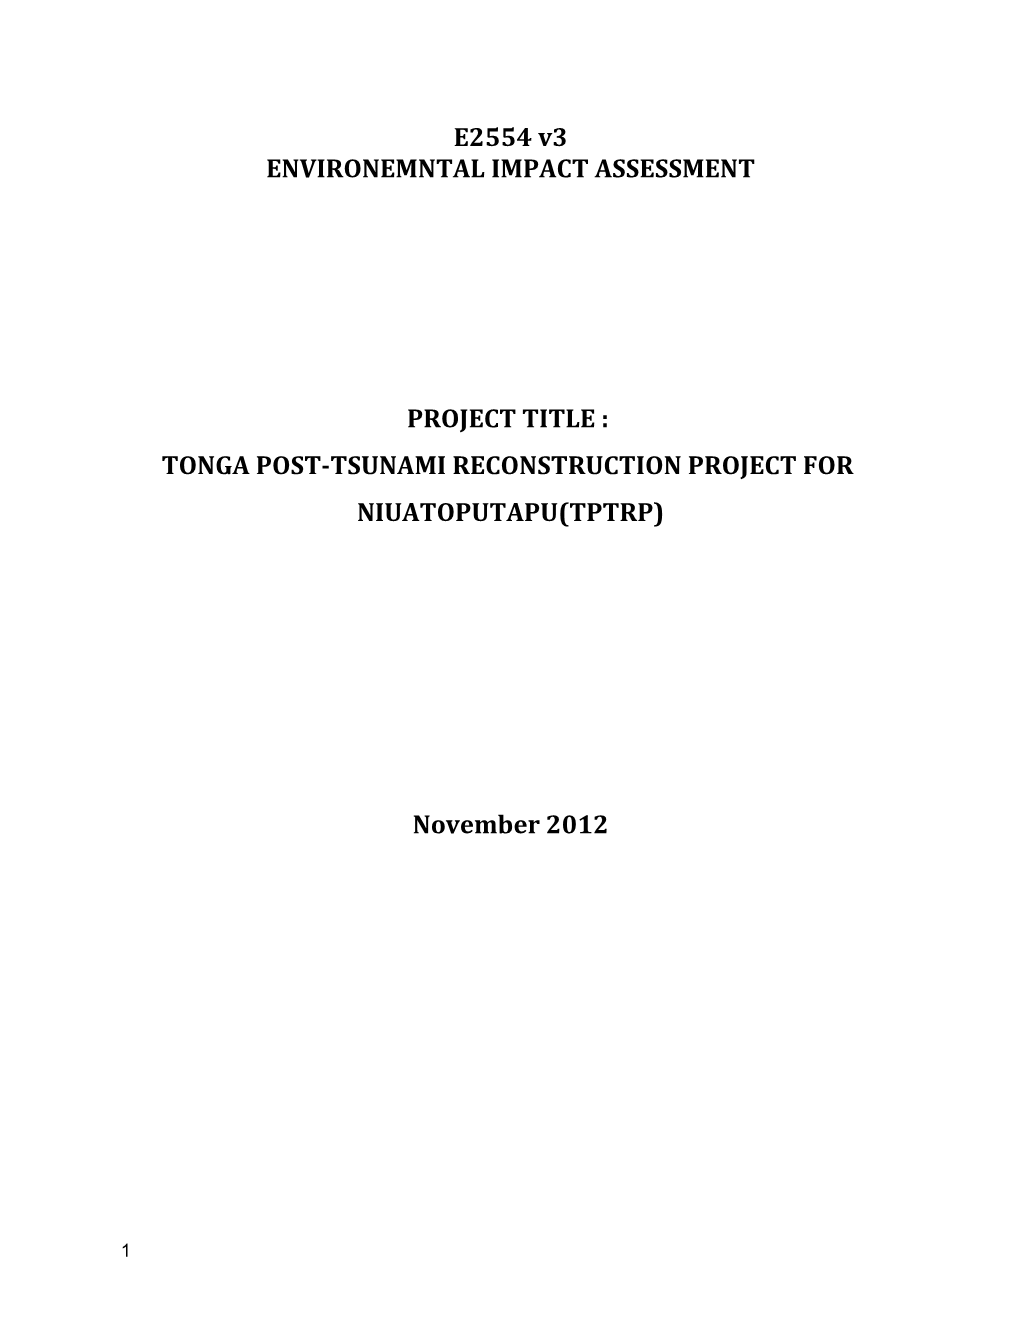 Tonga Post-Tsunami Reconstruction Project For